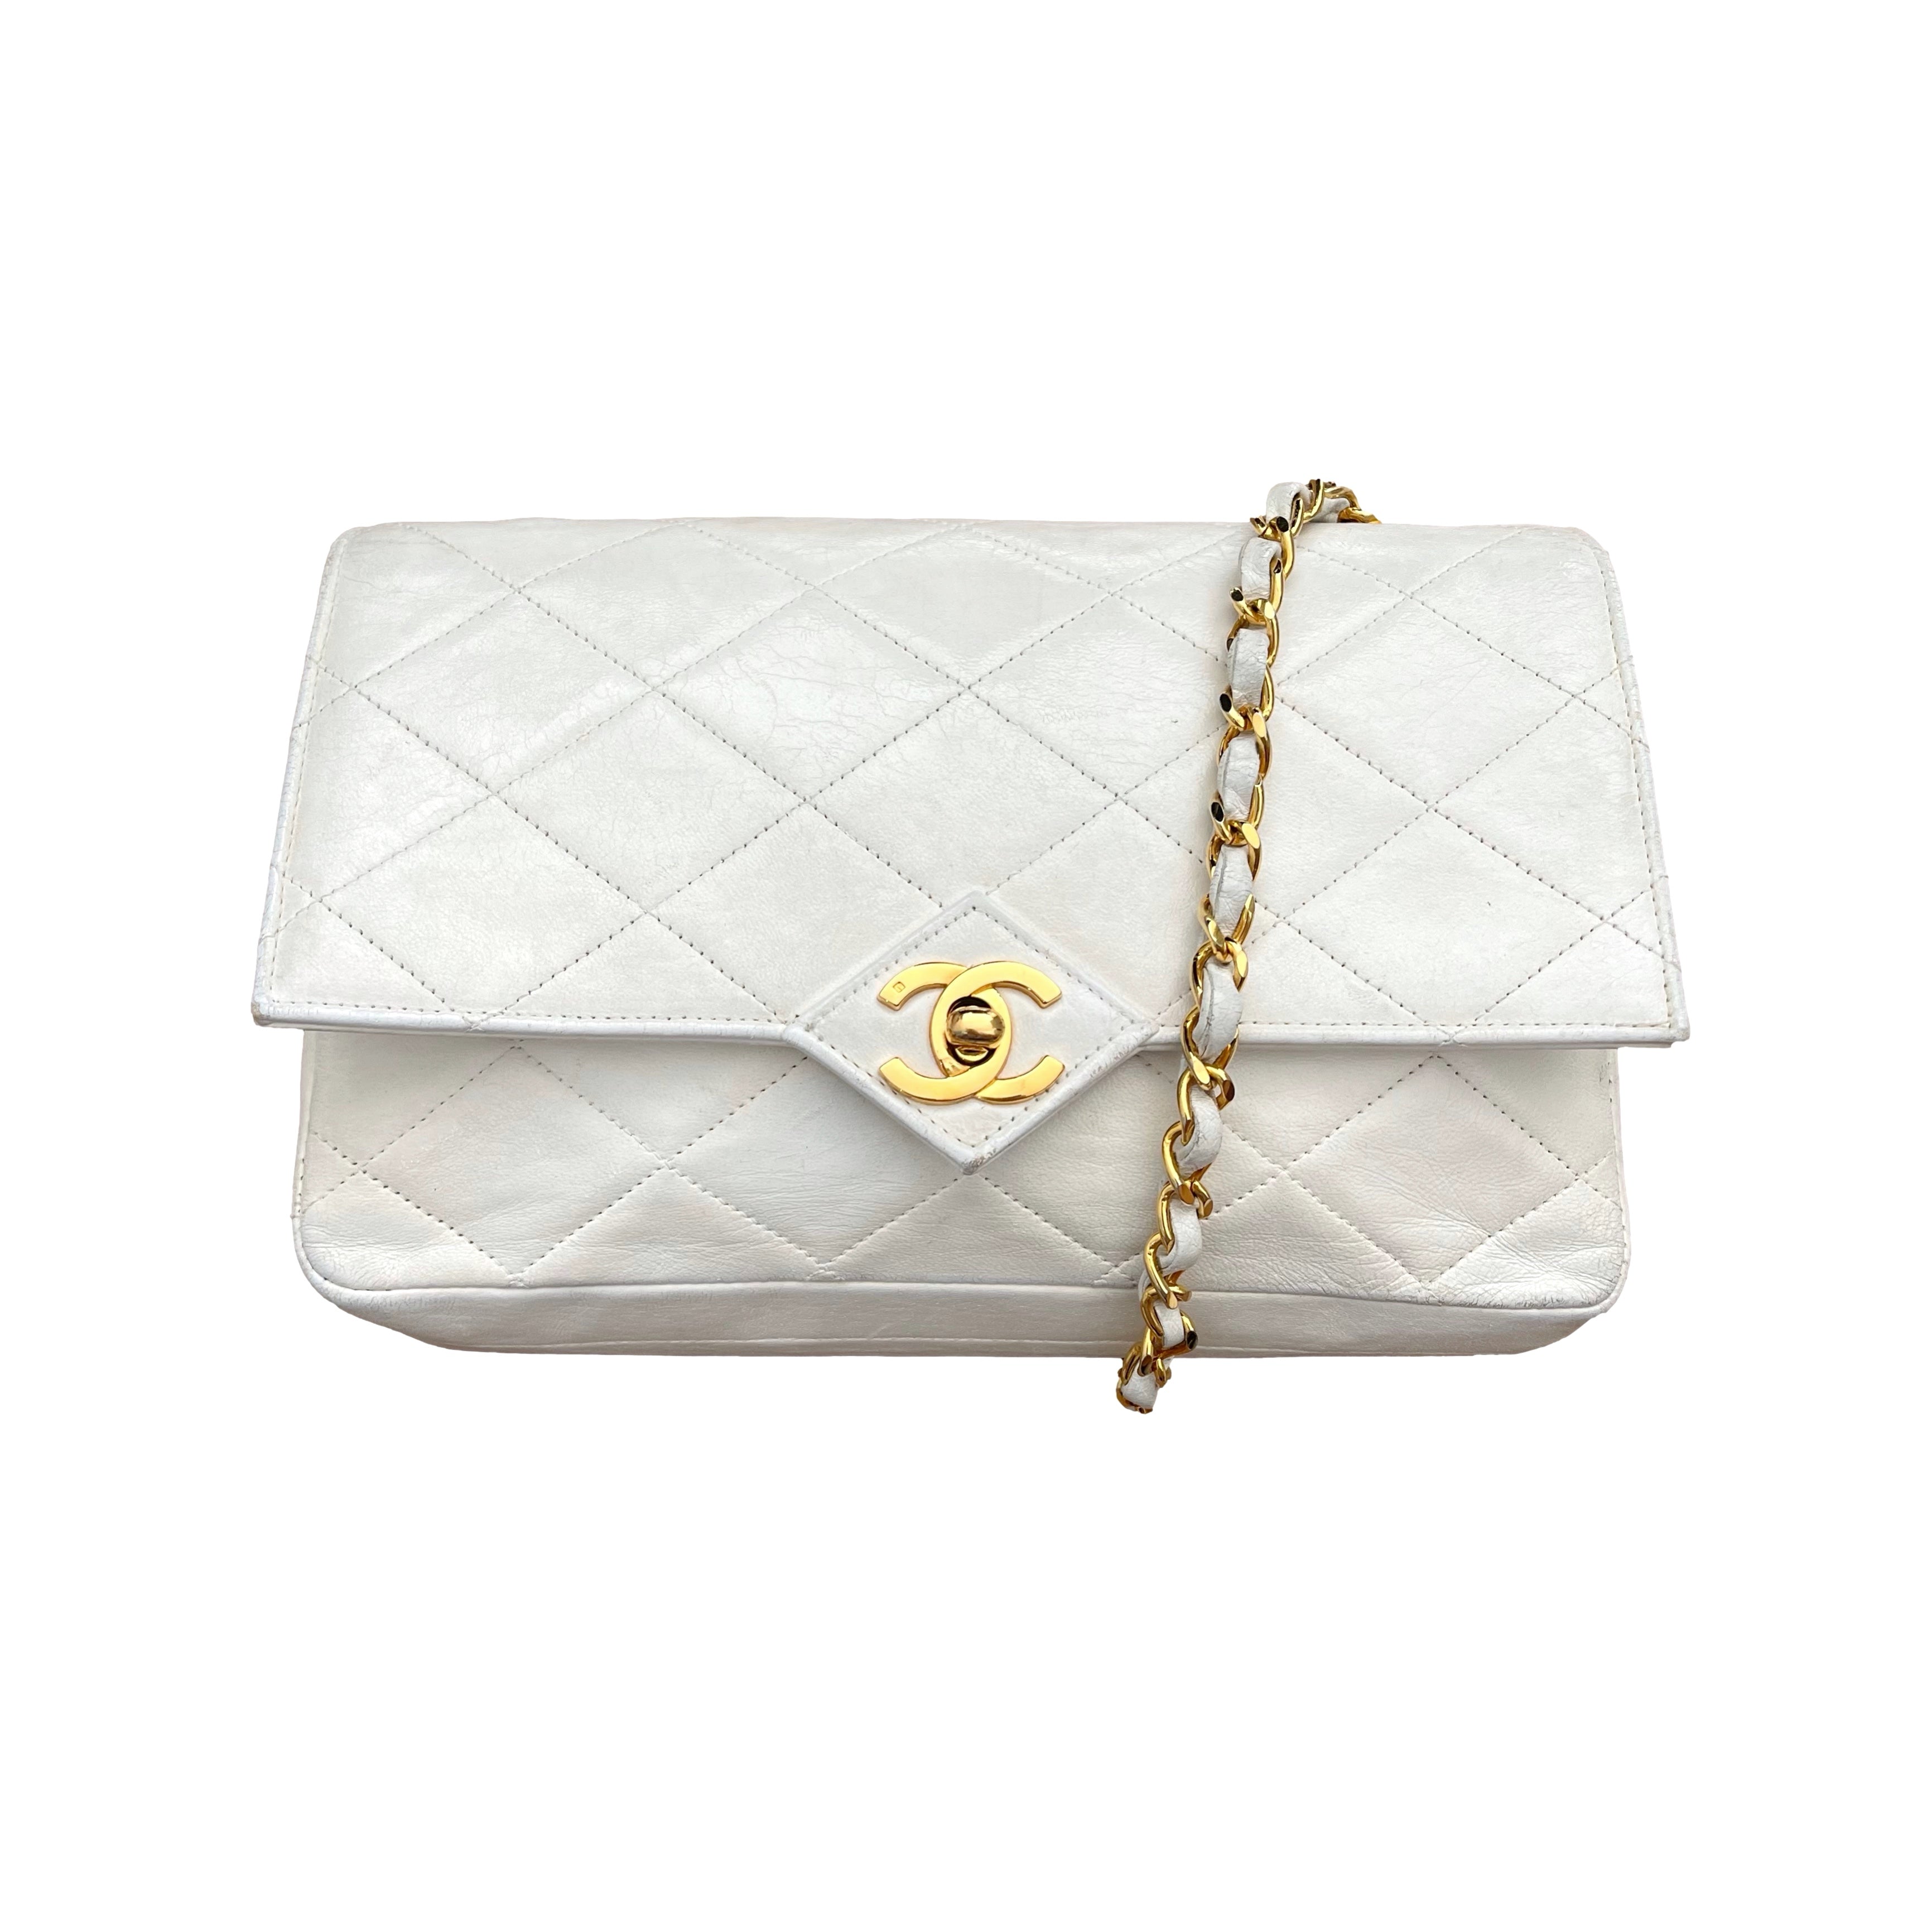 Treasures of NYC - Chanel White Lambskin Flap Bag